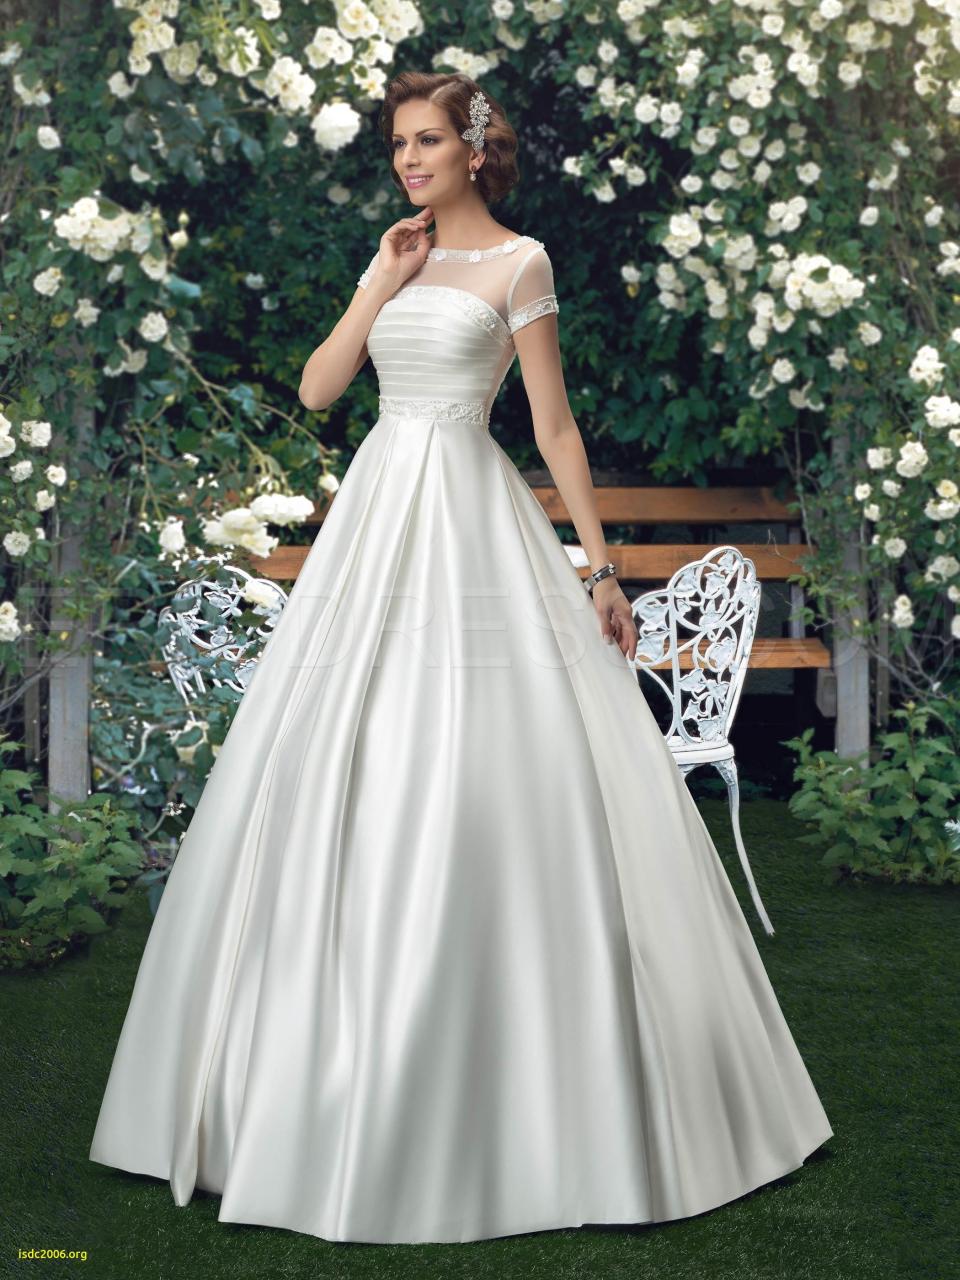 Discount Nwd29 2017 Fashionable Bride Short Sleeve See Through Satin Wedding Dress Church Plus Size Custom Made Bridal Gown Dresses Wedding Dresses